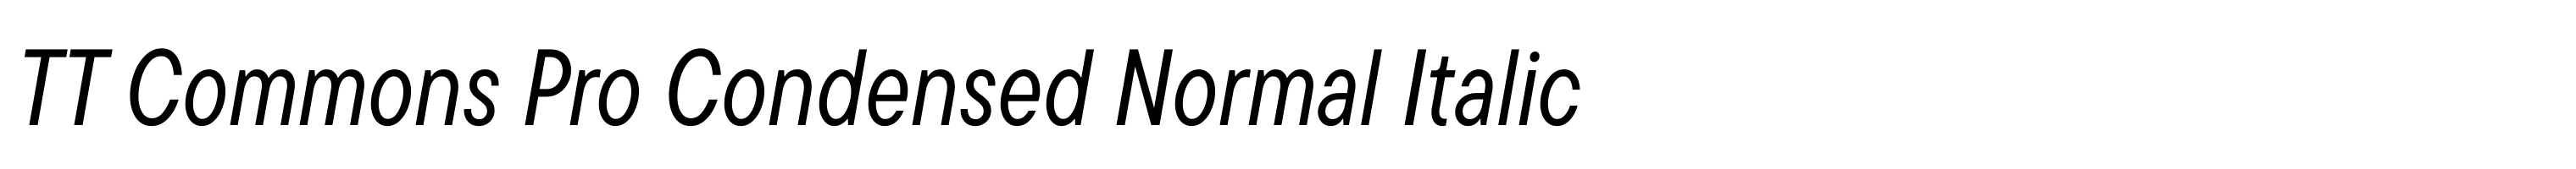 TT Commons Pro Condensed Normal Italic